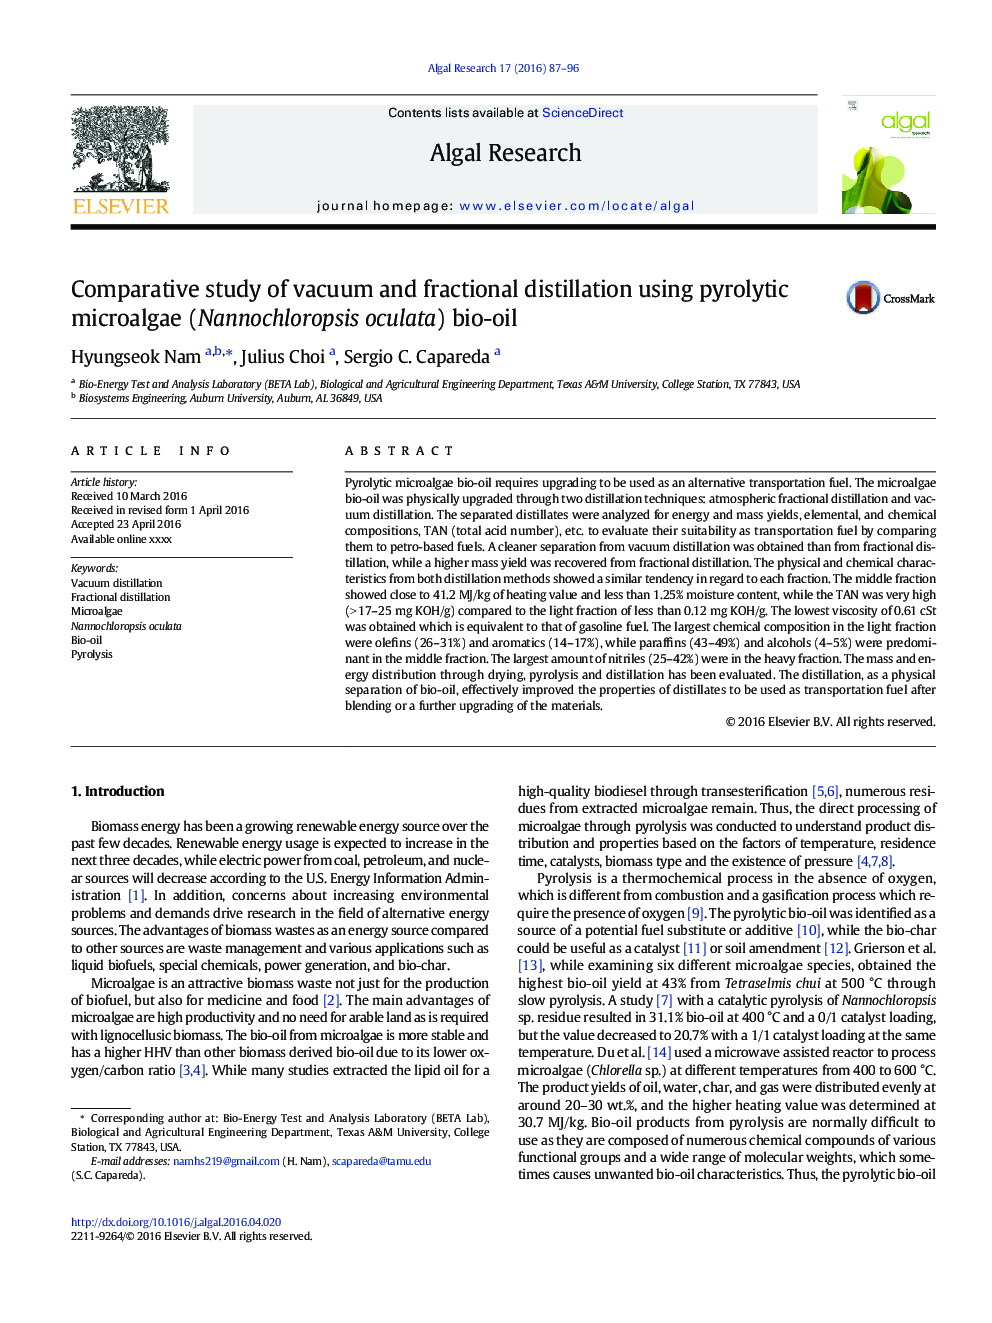 Comparative study of vacuum and fractional distillation using pyrolytic microalgae (Nannochloropsis oculata) bio-oil